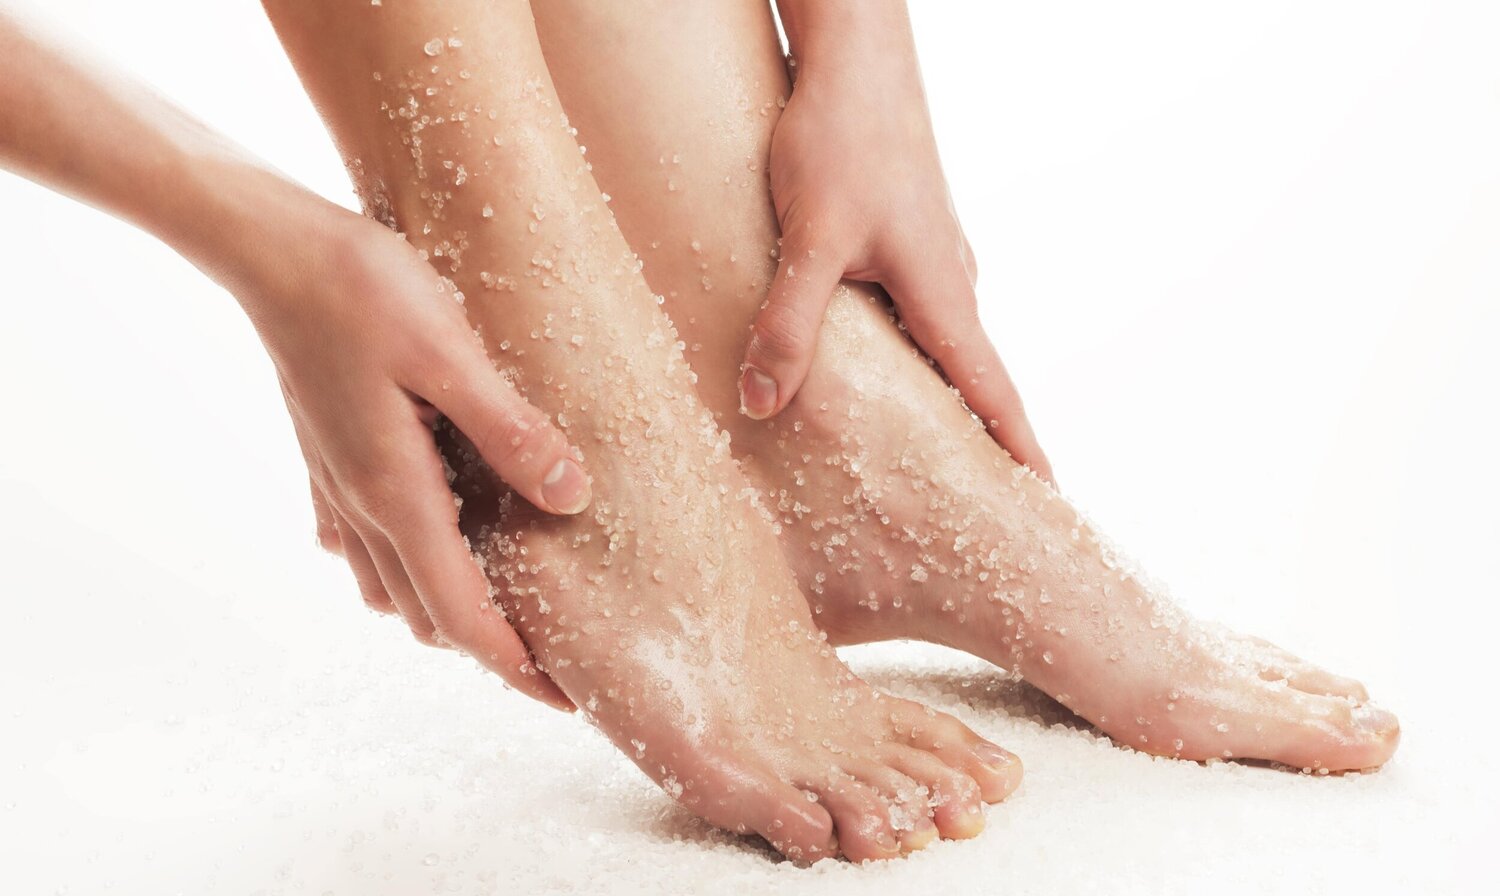 Acid-Based Exfoliating Products for the Feet: AHA & BHA Explained